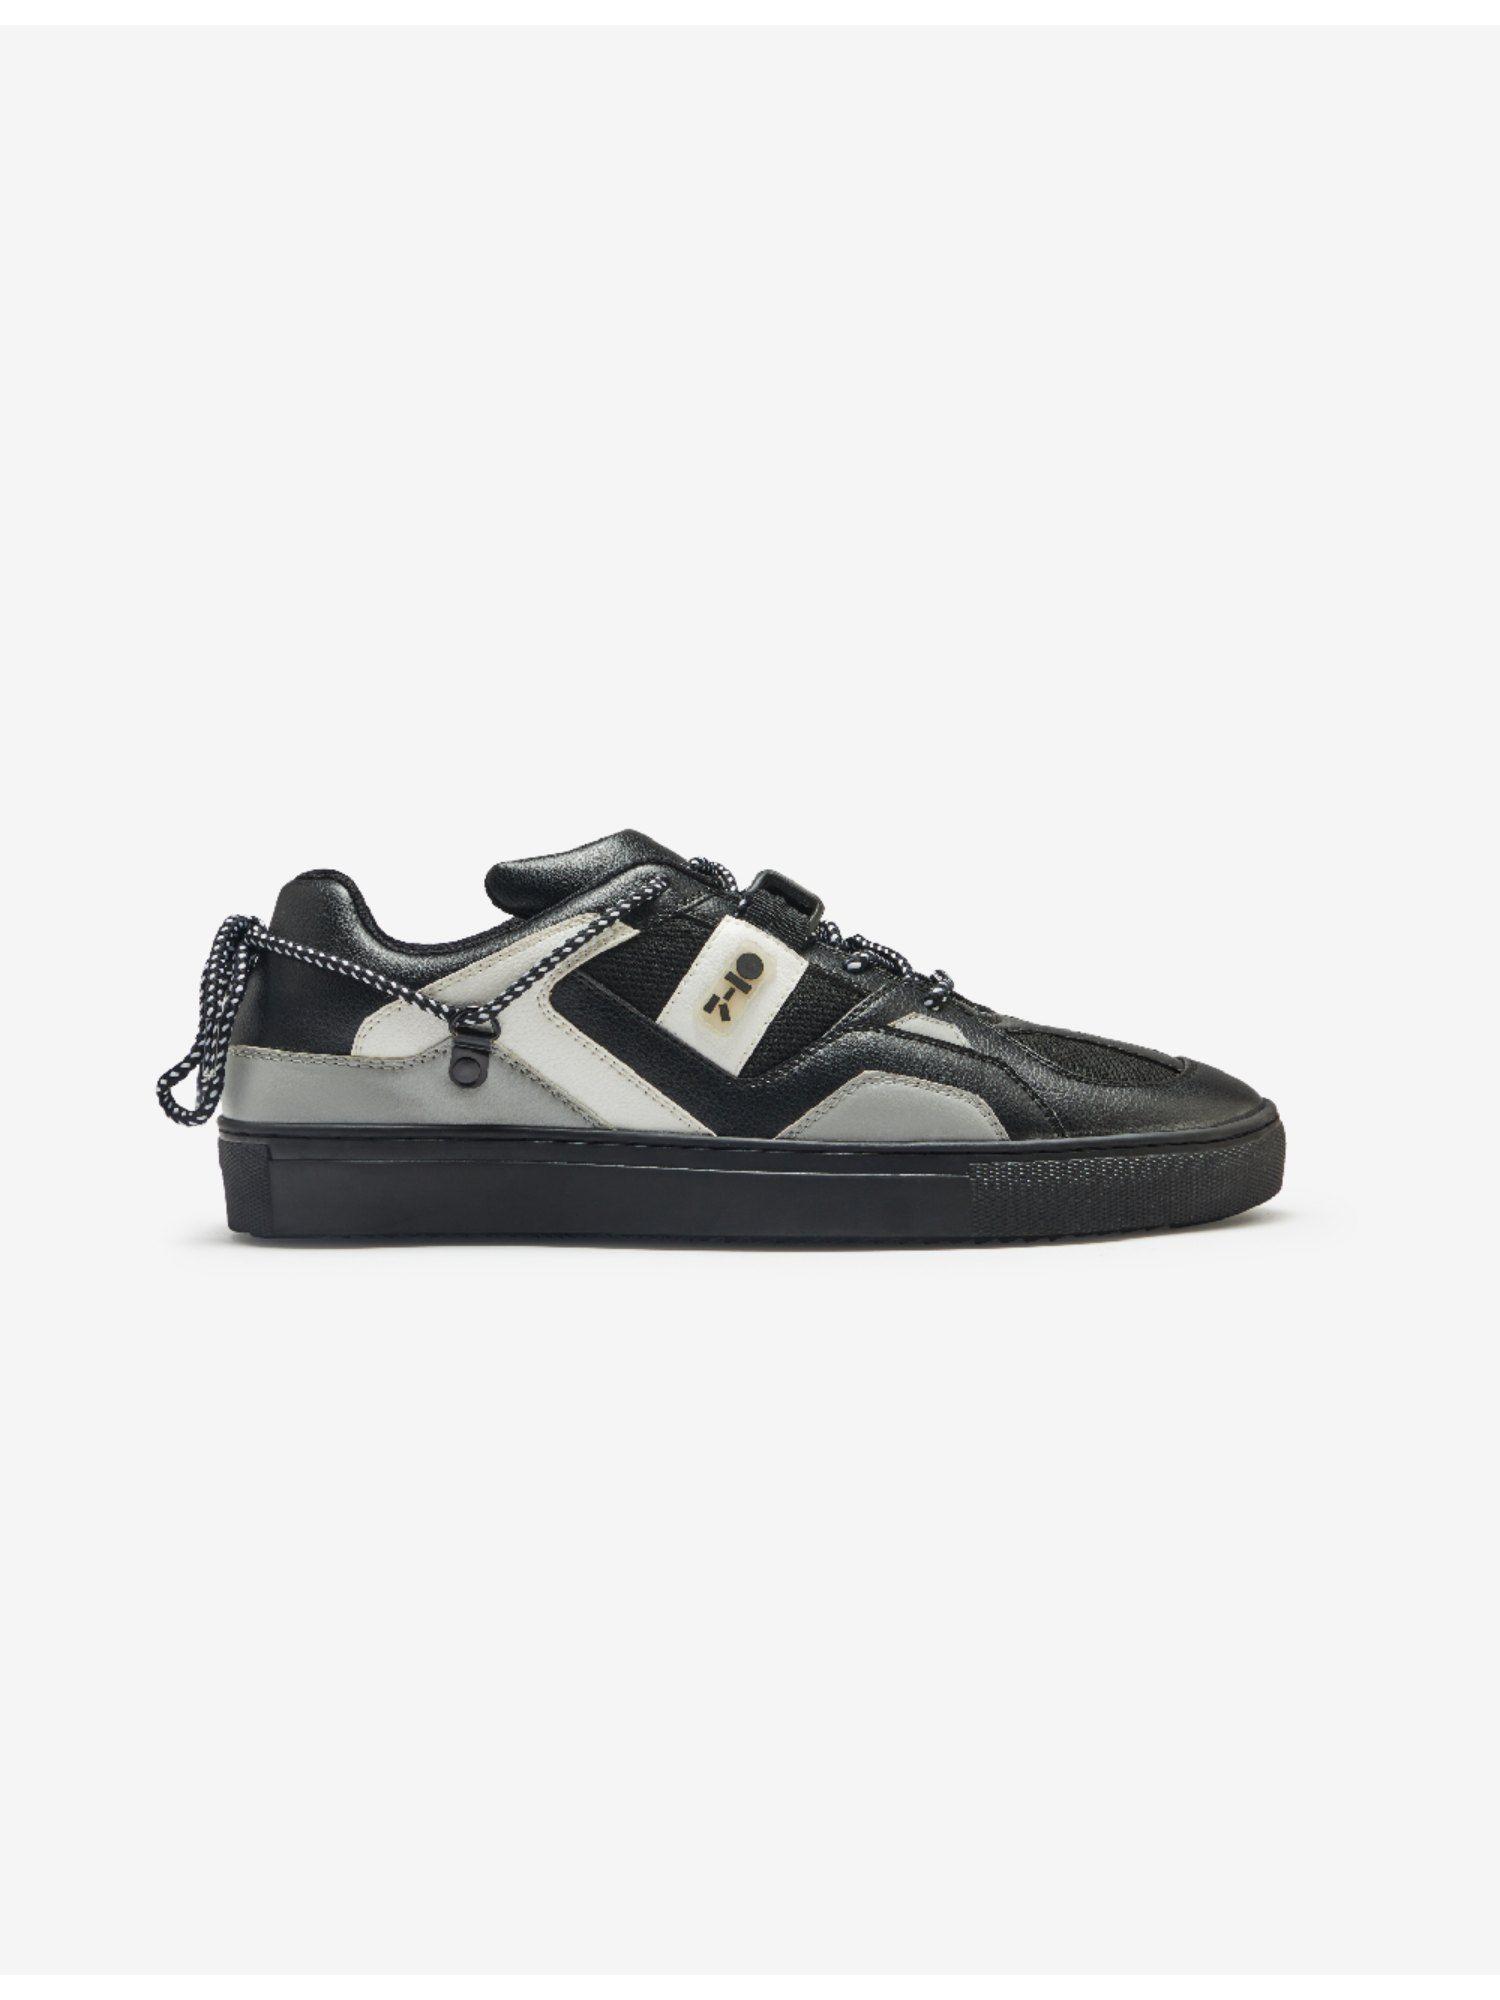 610 Hardware Low-Top Black Grey Colorblock Sneakers